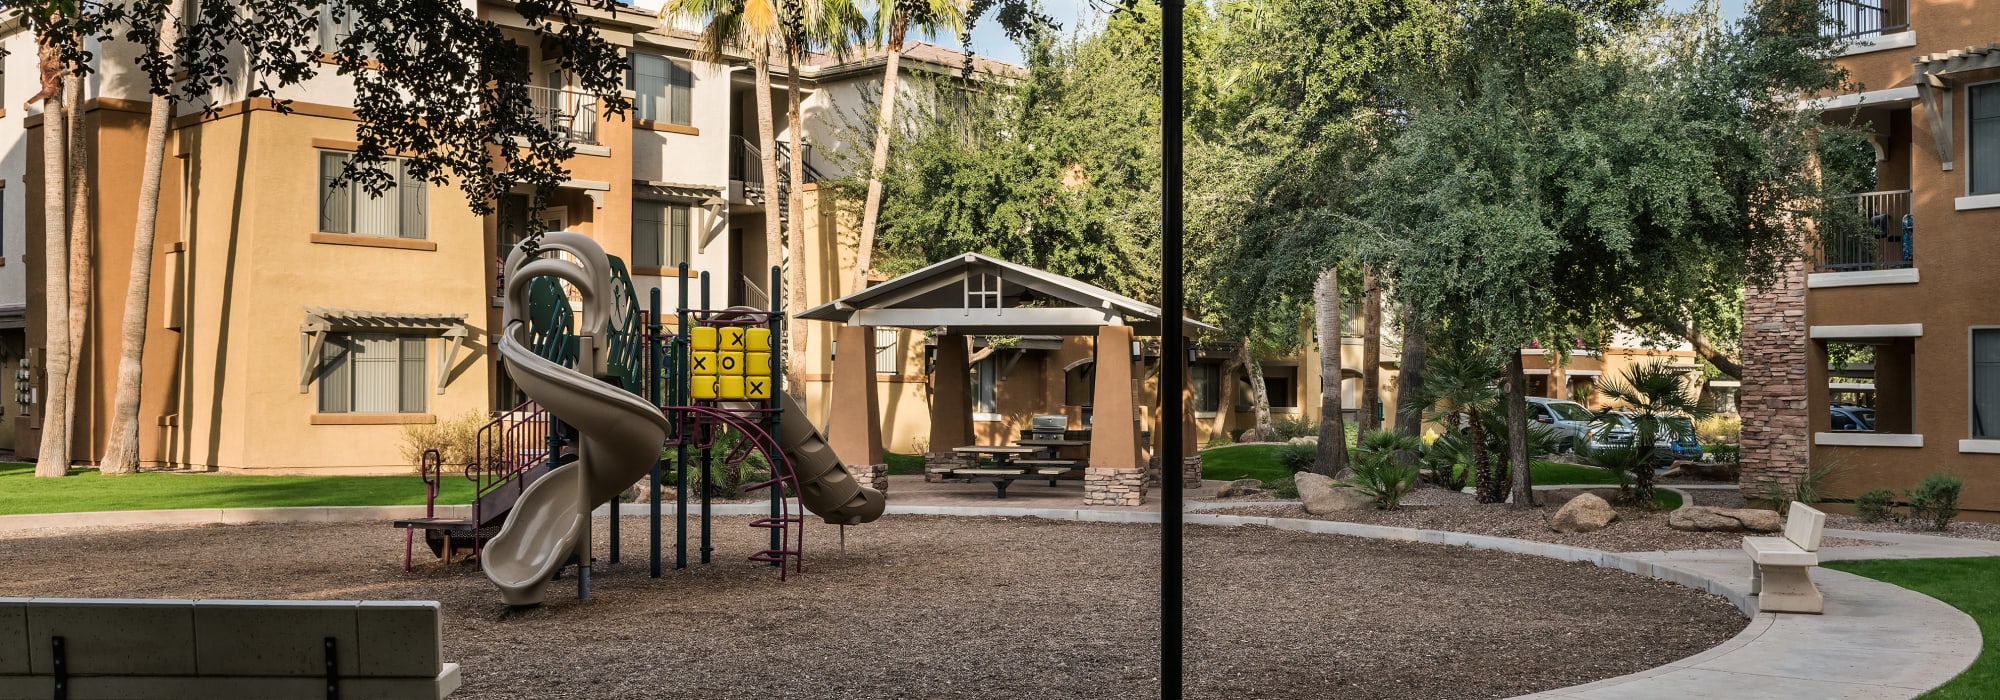 Playground at Borrego at Spectrum in Gilbert, Arizona